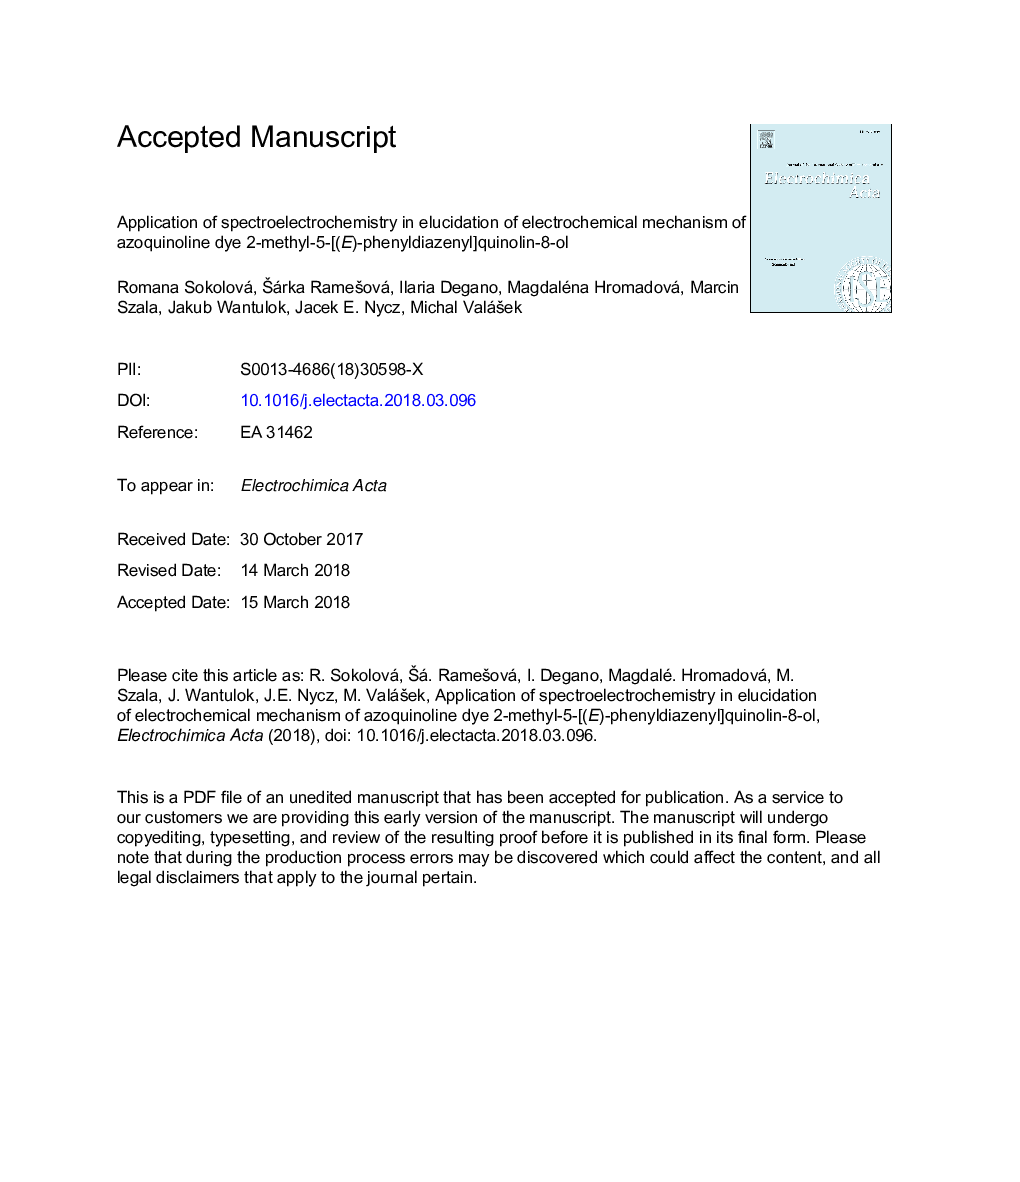 Application of spectroelectrochemistry in elucidation of electrochemical mechanism of azoquinoline dye 2-methyl-5-[(E)-phenyldiazenyl]quinolin-8-ol